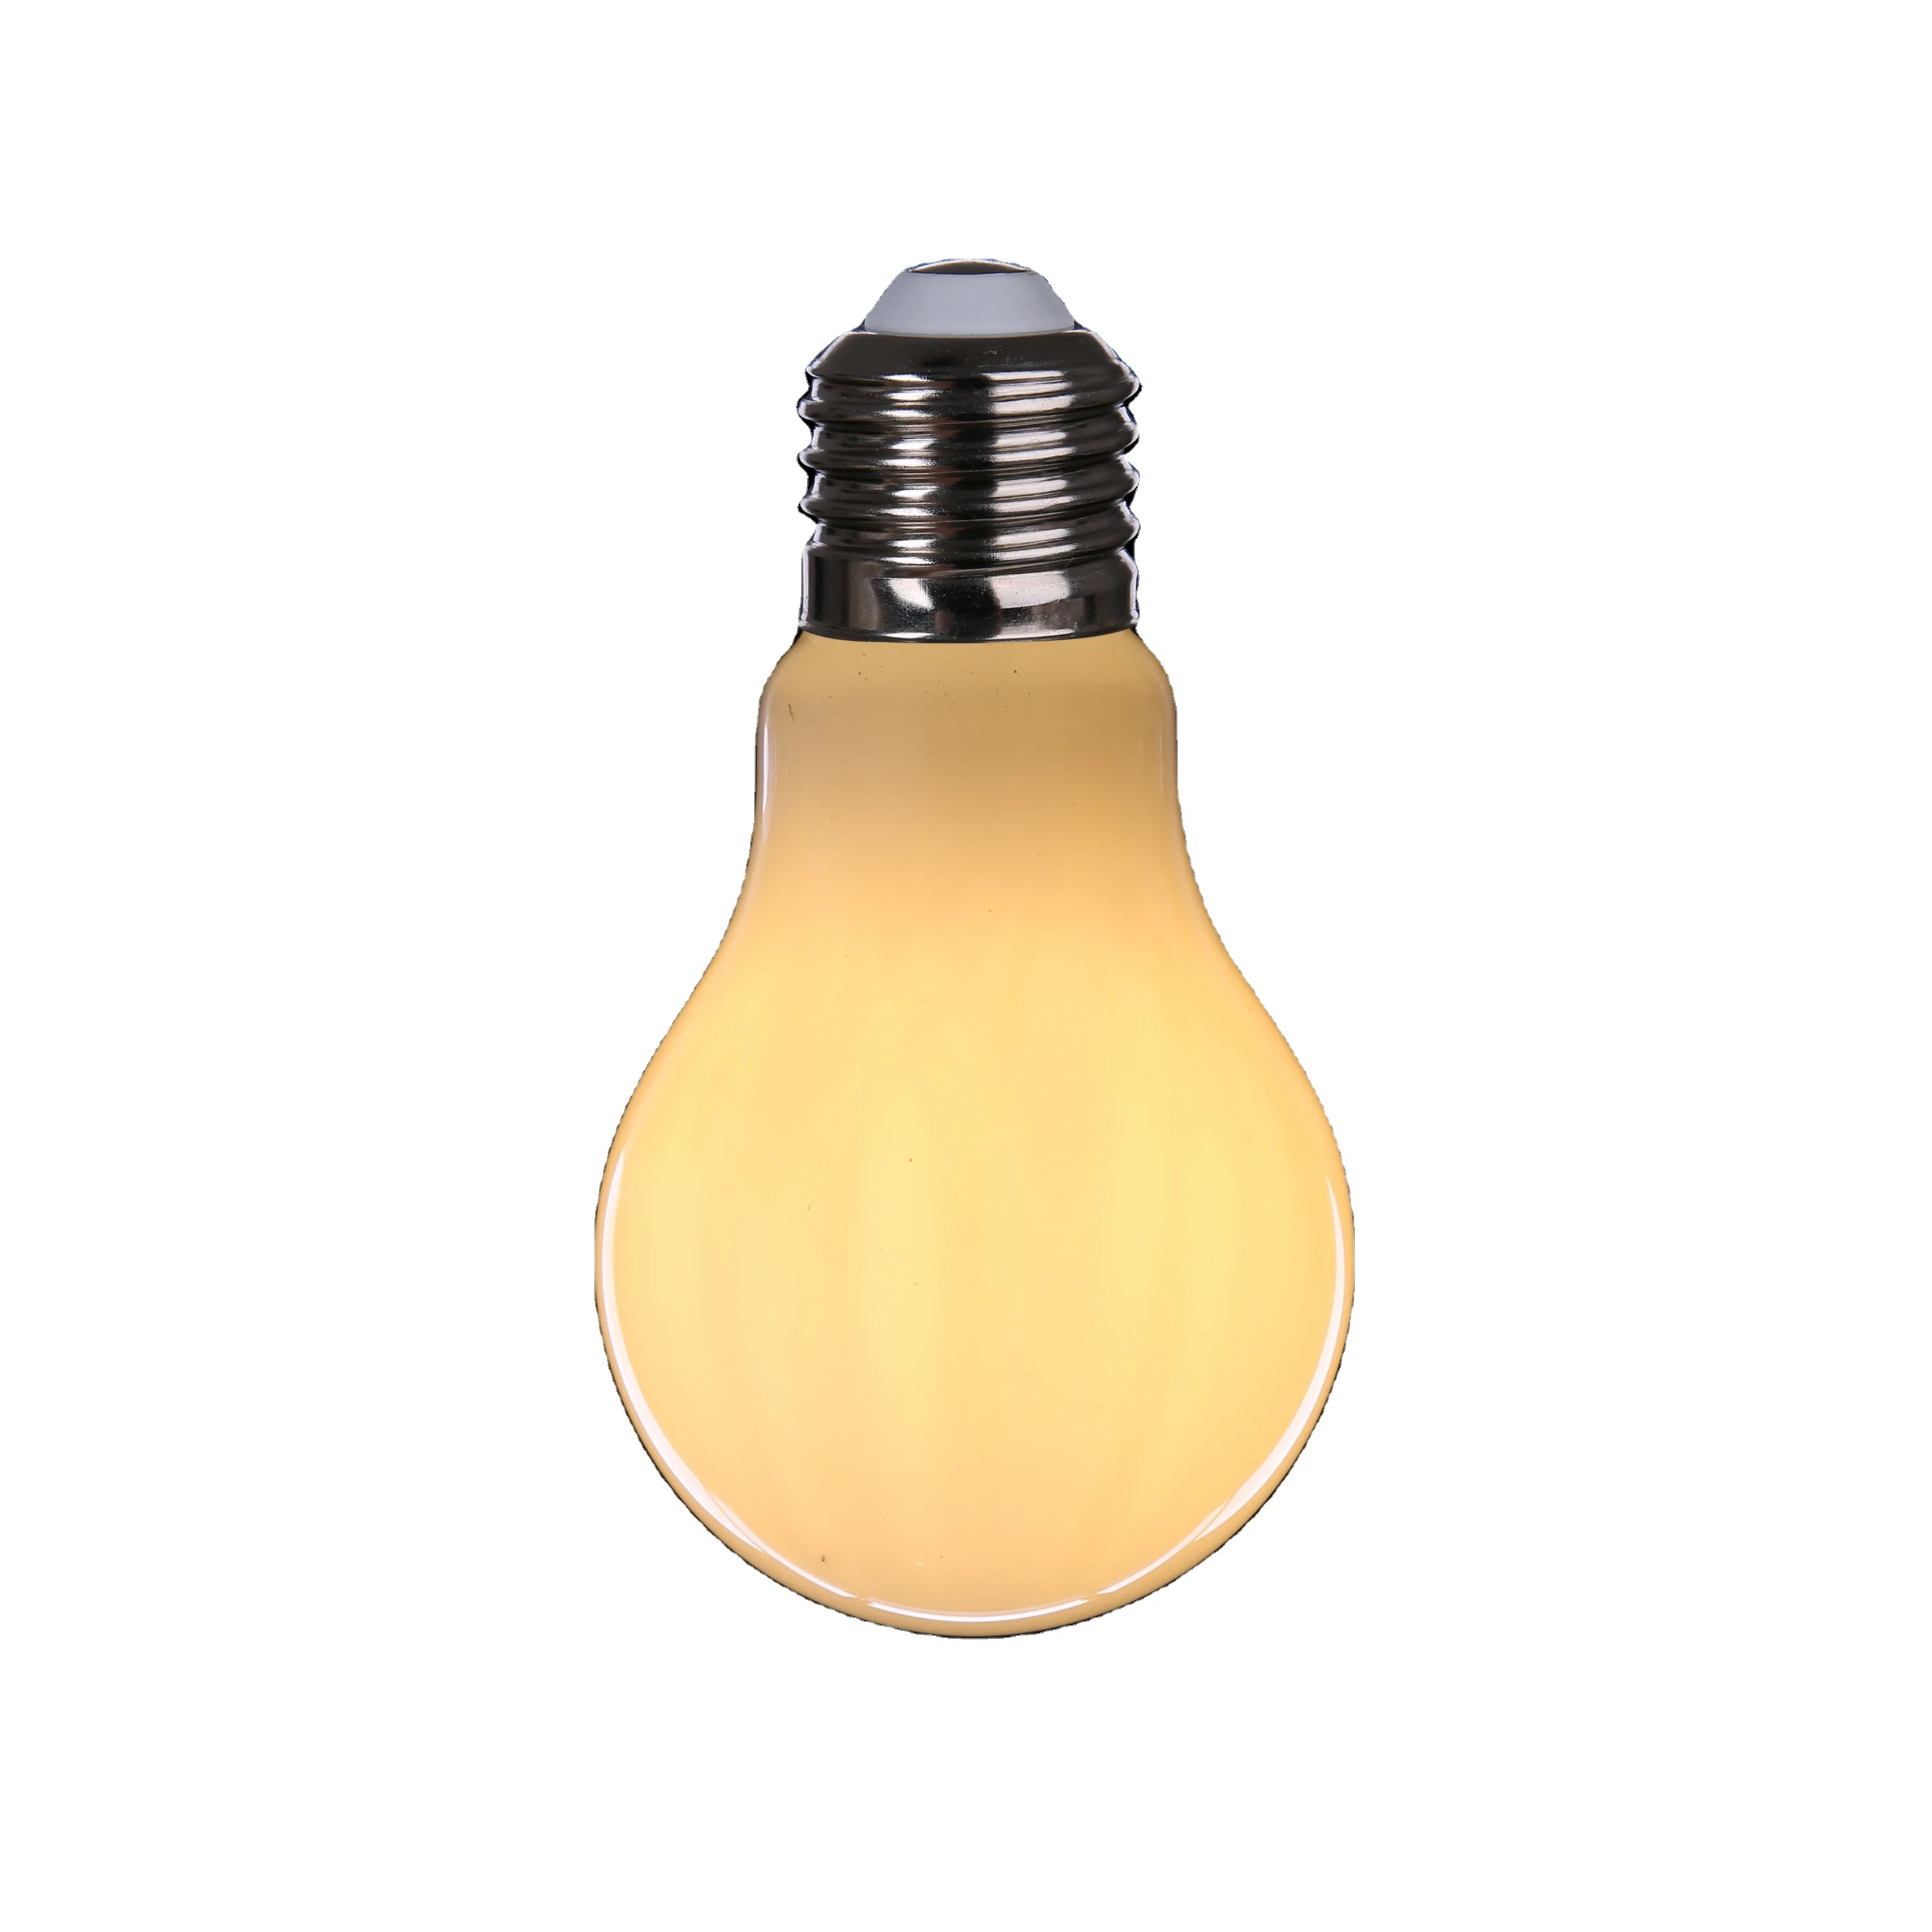 CCT changeable Wifi Bluetooth control light led filament bulb smart lamp a60 g95 g80 globe milk opal shell factory